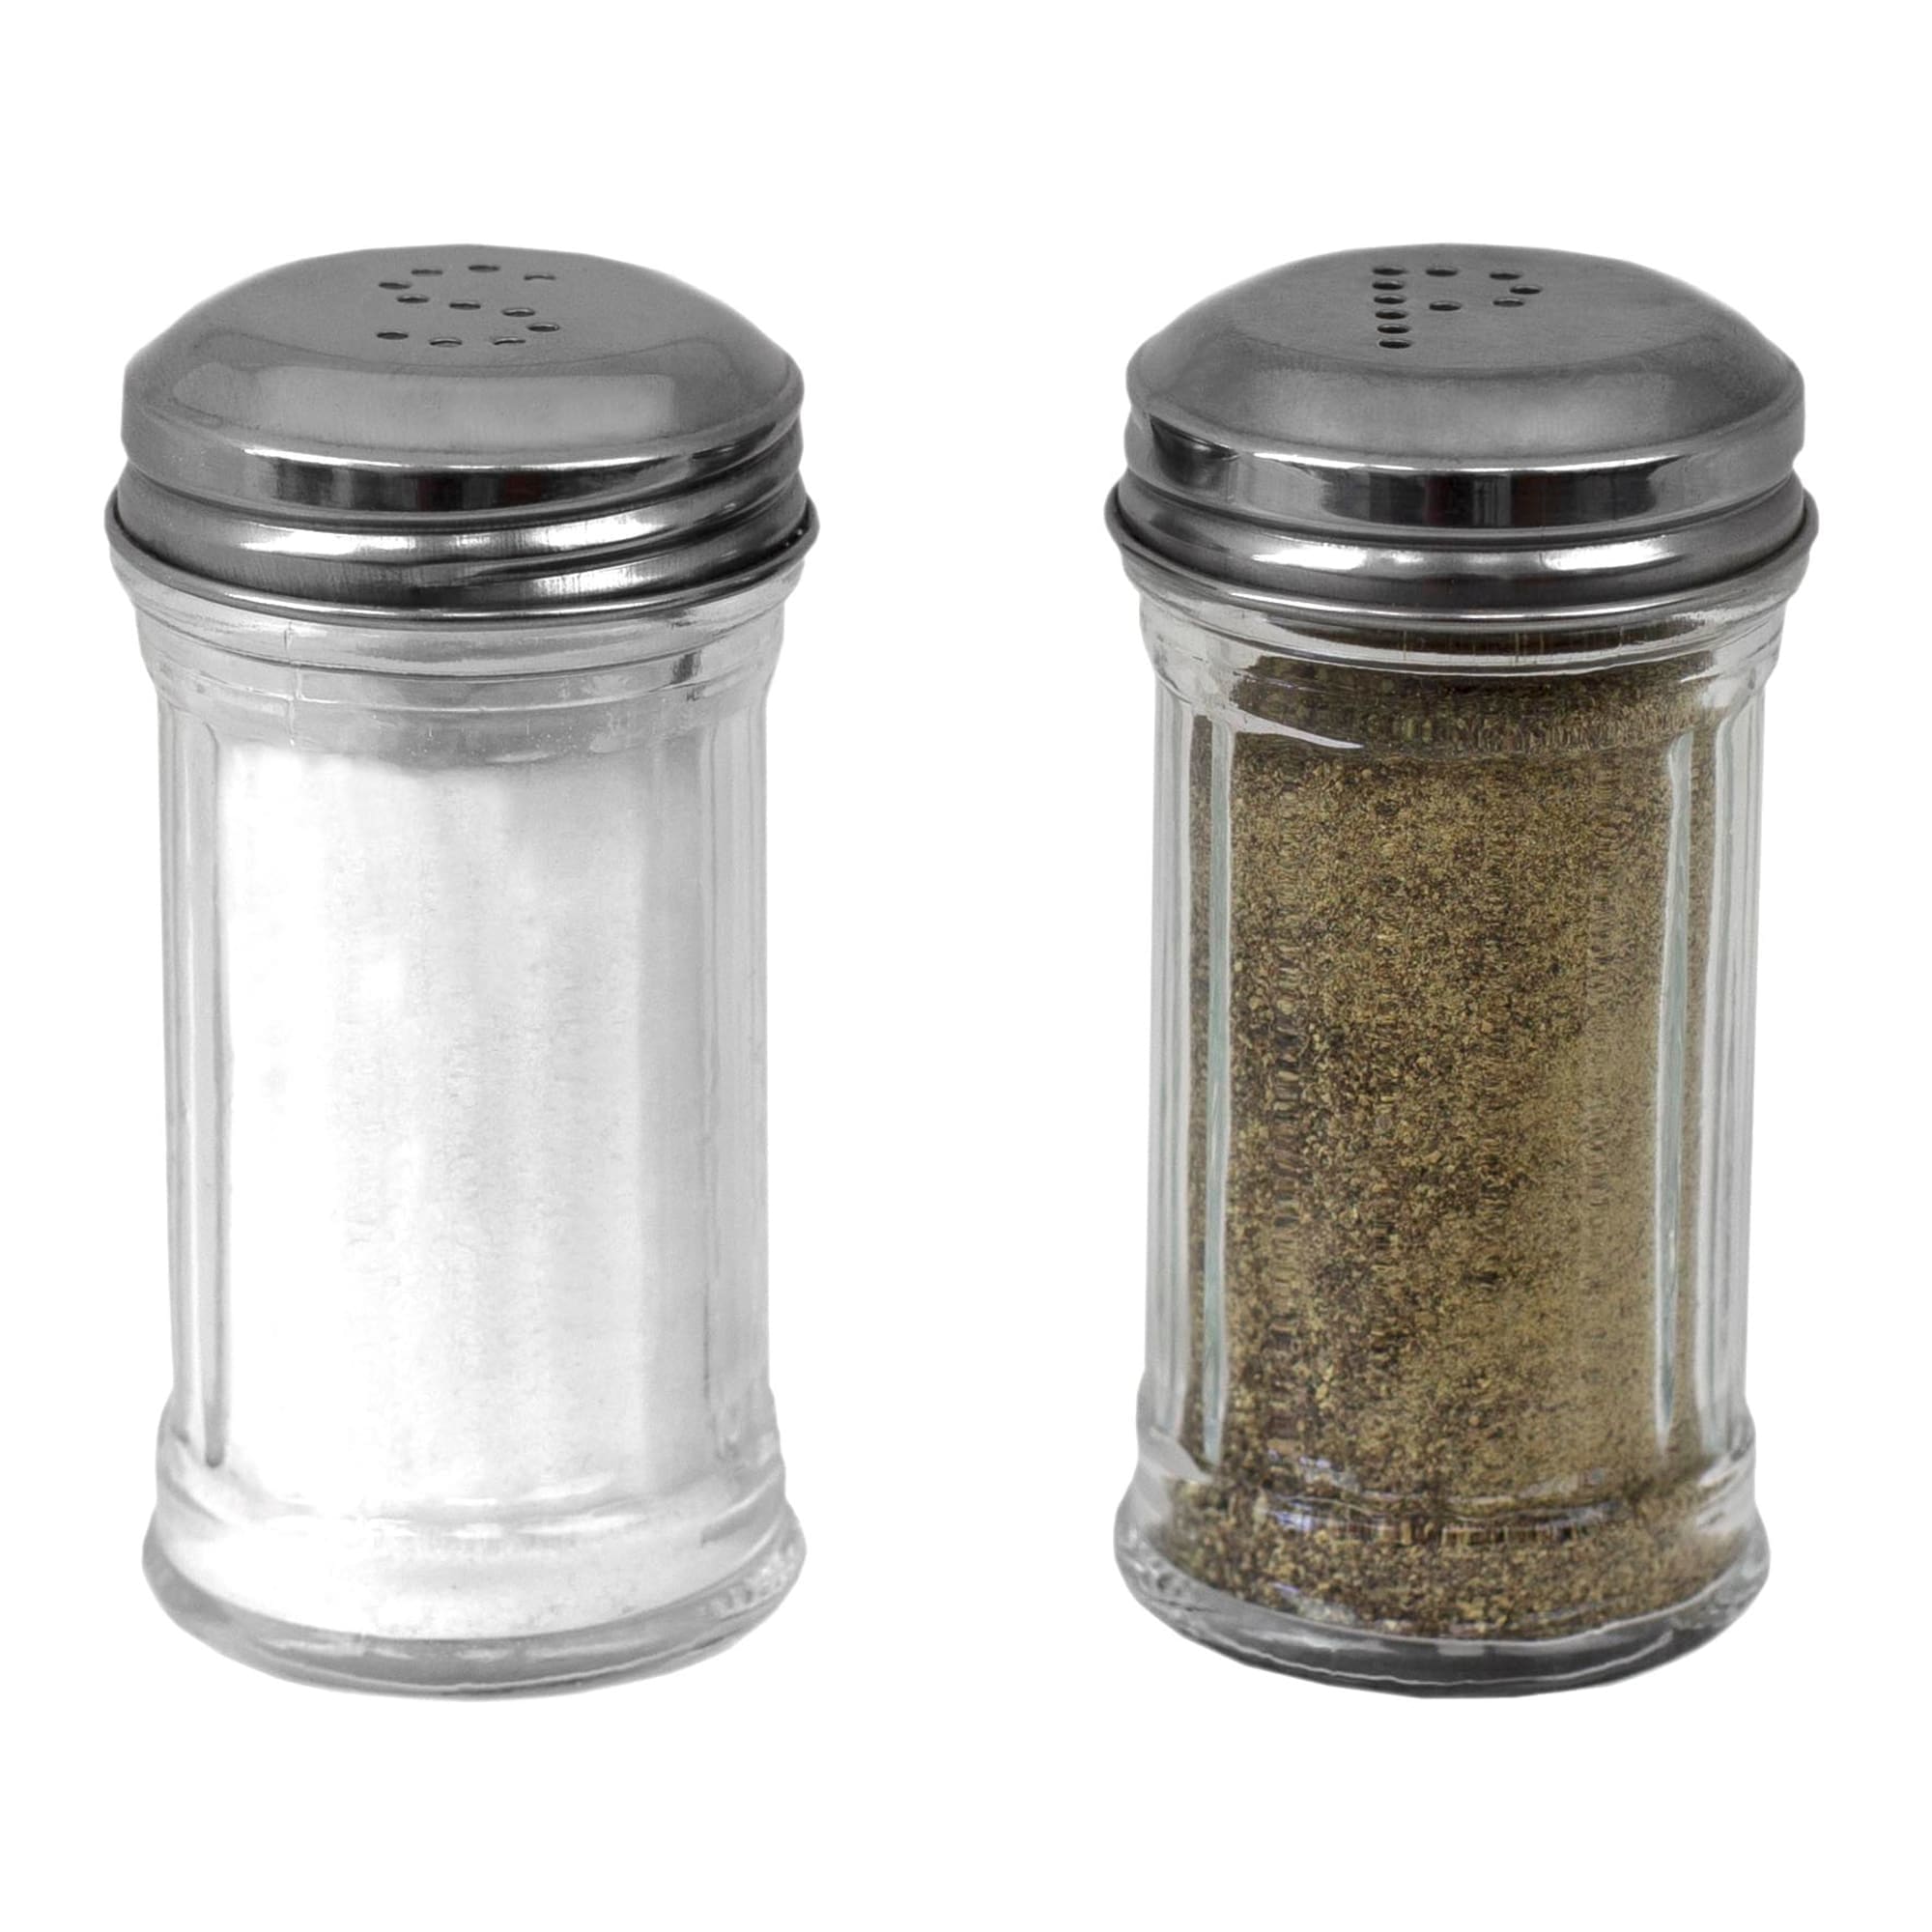 2 oz. Salt and Pepper Shaker, Clear | FOOD PREP | SHOP HOME BASICS